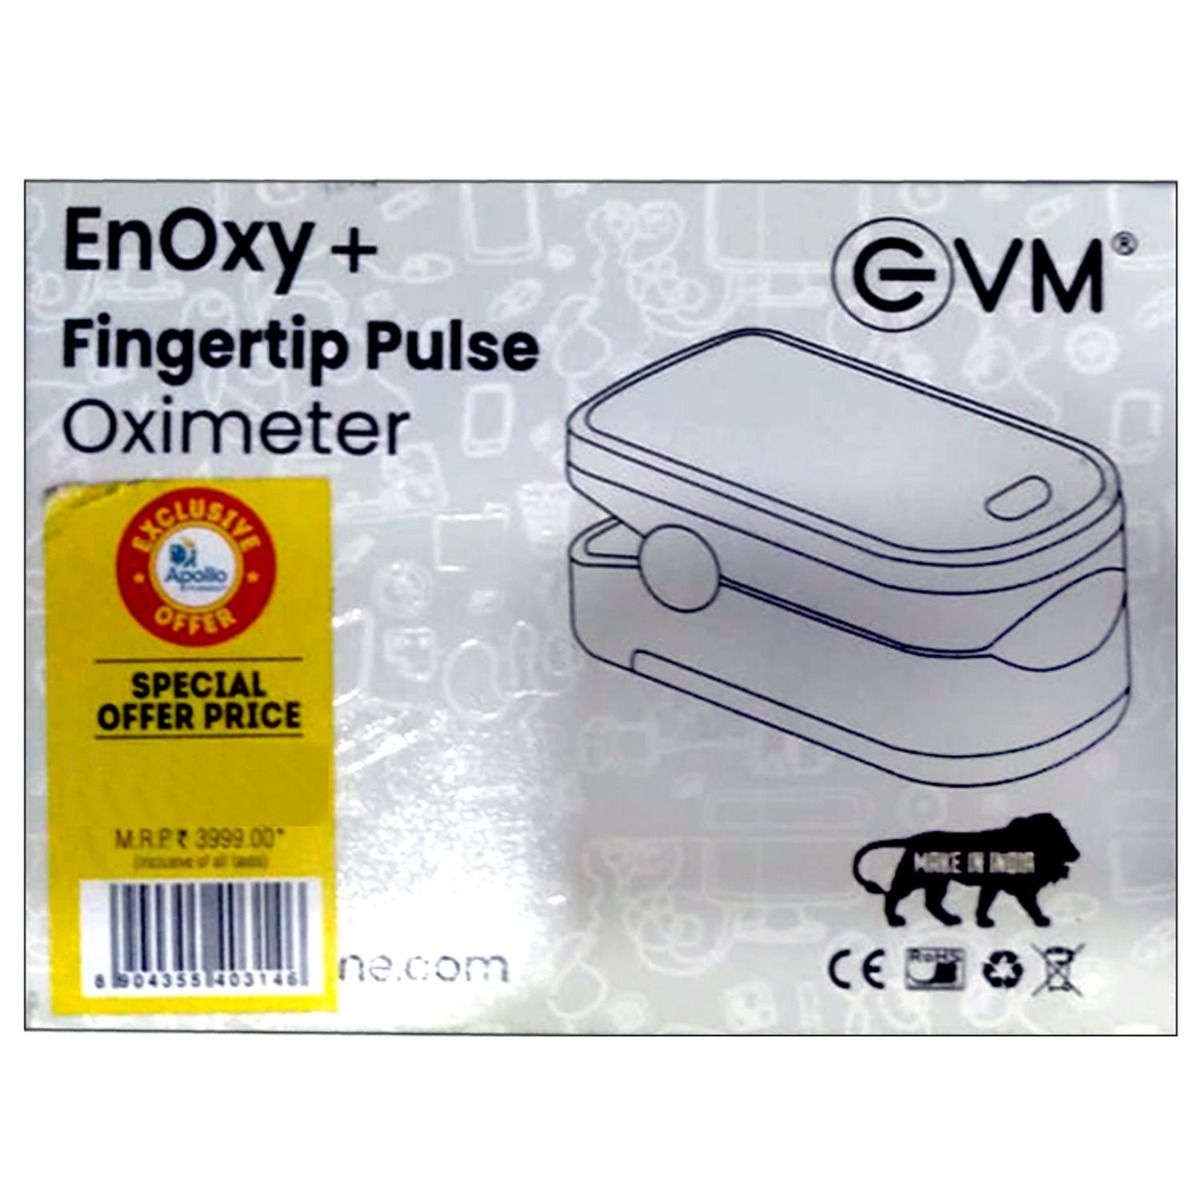 Apollo Life EnOxy + Fingertip Pulse Oximeter E-OX-05, 1 Count, Pack of 1 